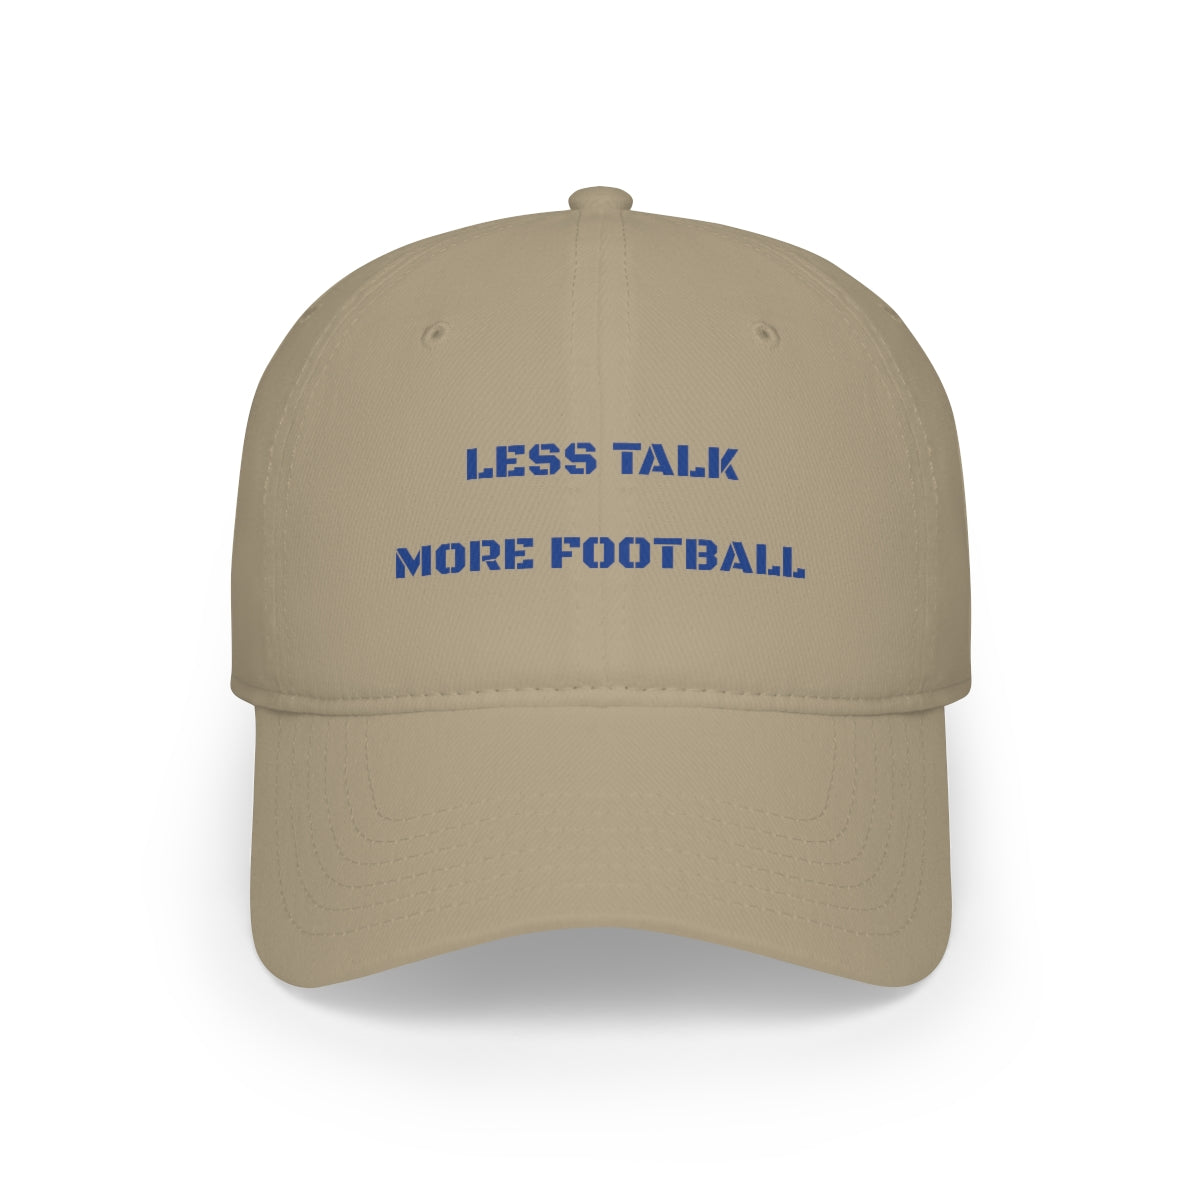 LESS TALK MORE FOOTBALL - Low Profile Baseball Cap